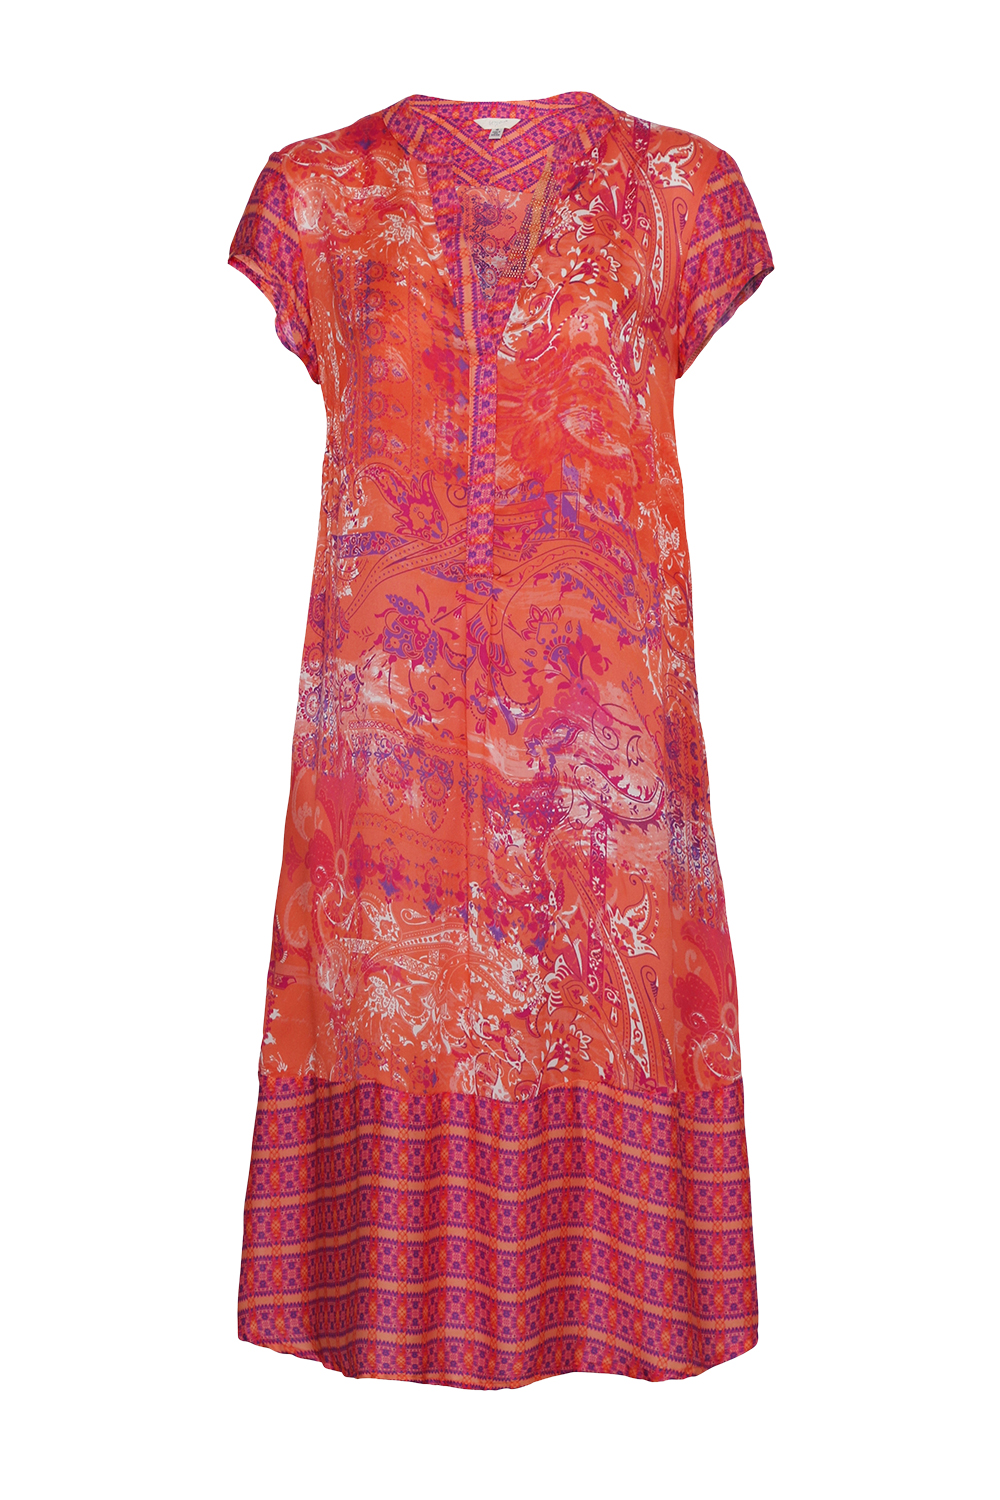 Dress, $290, by Verge.